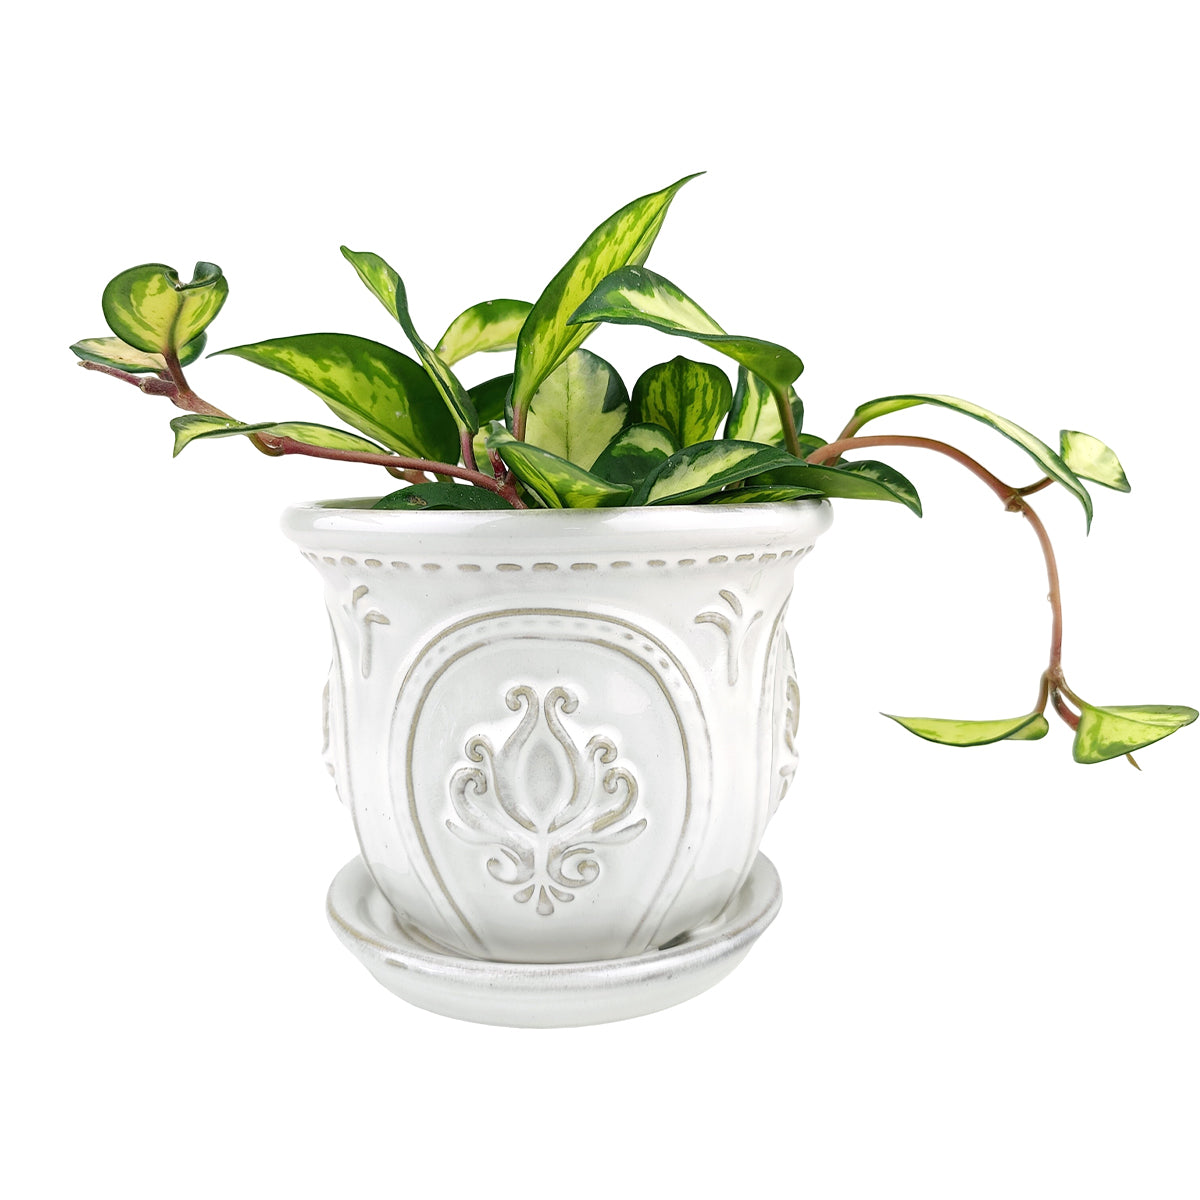 ceramic planter, classic pattern planter, white ceramic planter, 6 inch ceramic planter, classic ornate ceramic planter, houseplant pot